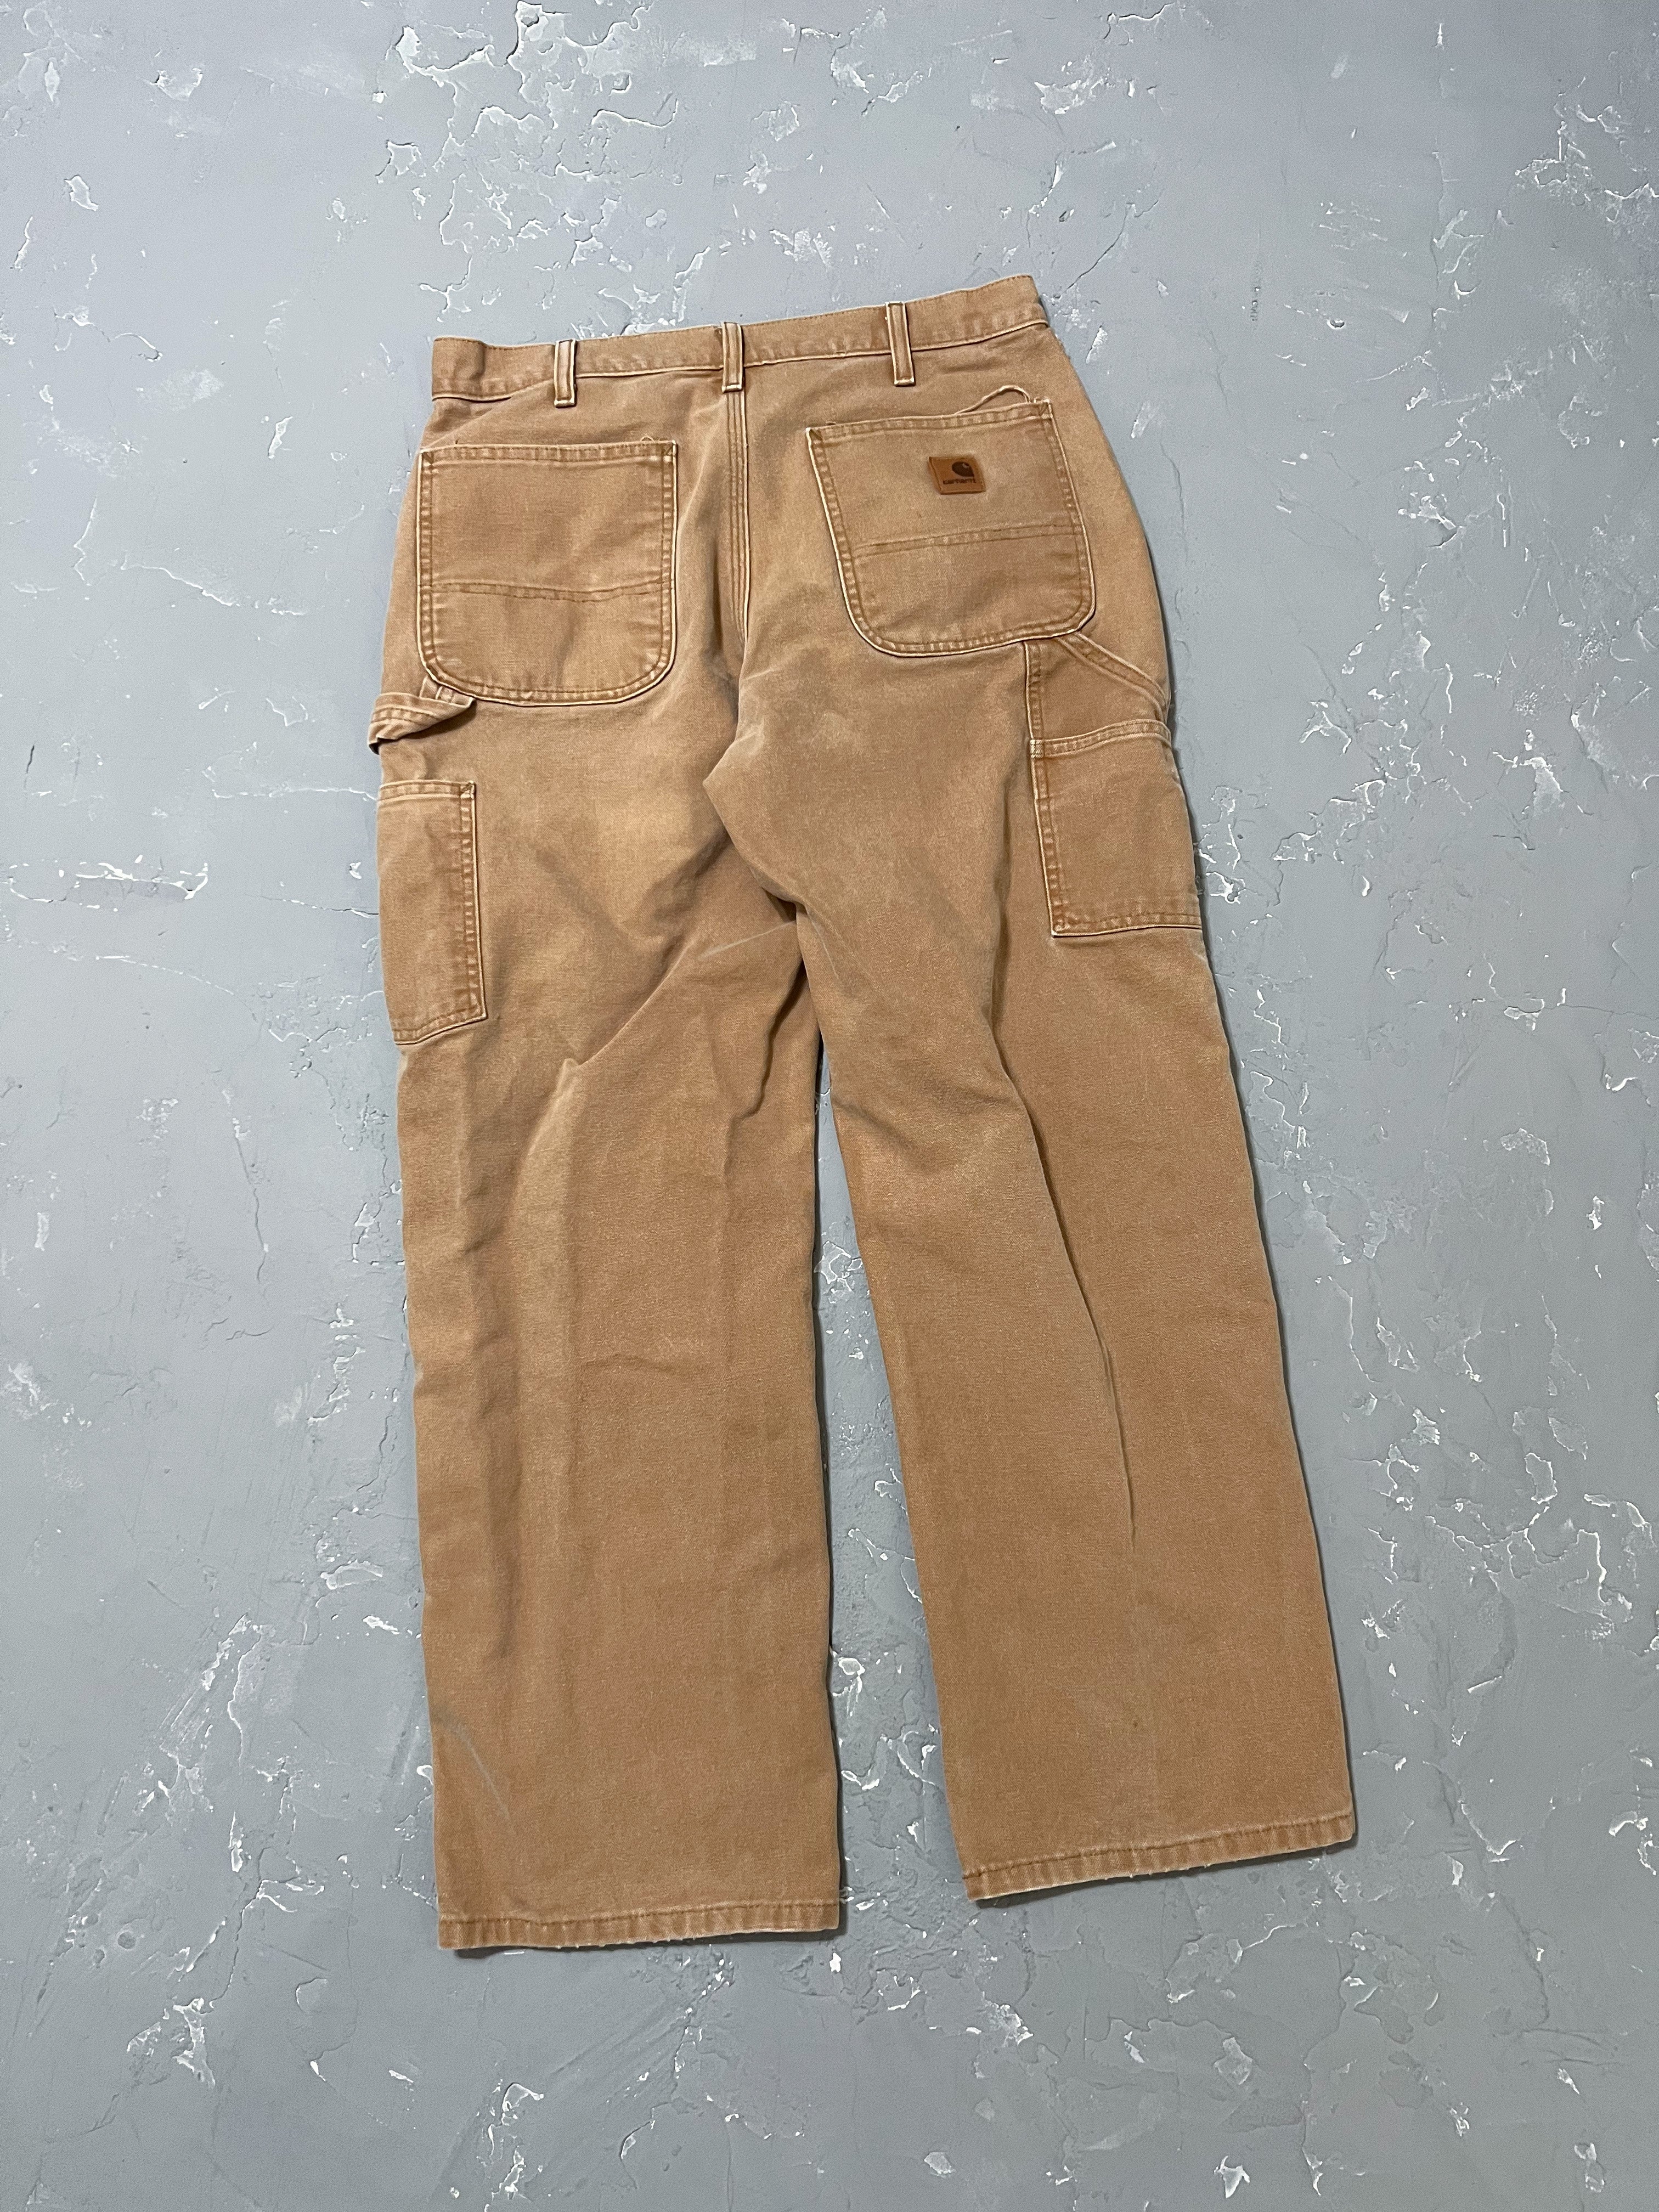 Carhartt Tan Carpenter Pants [32 x 30]